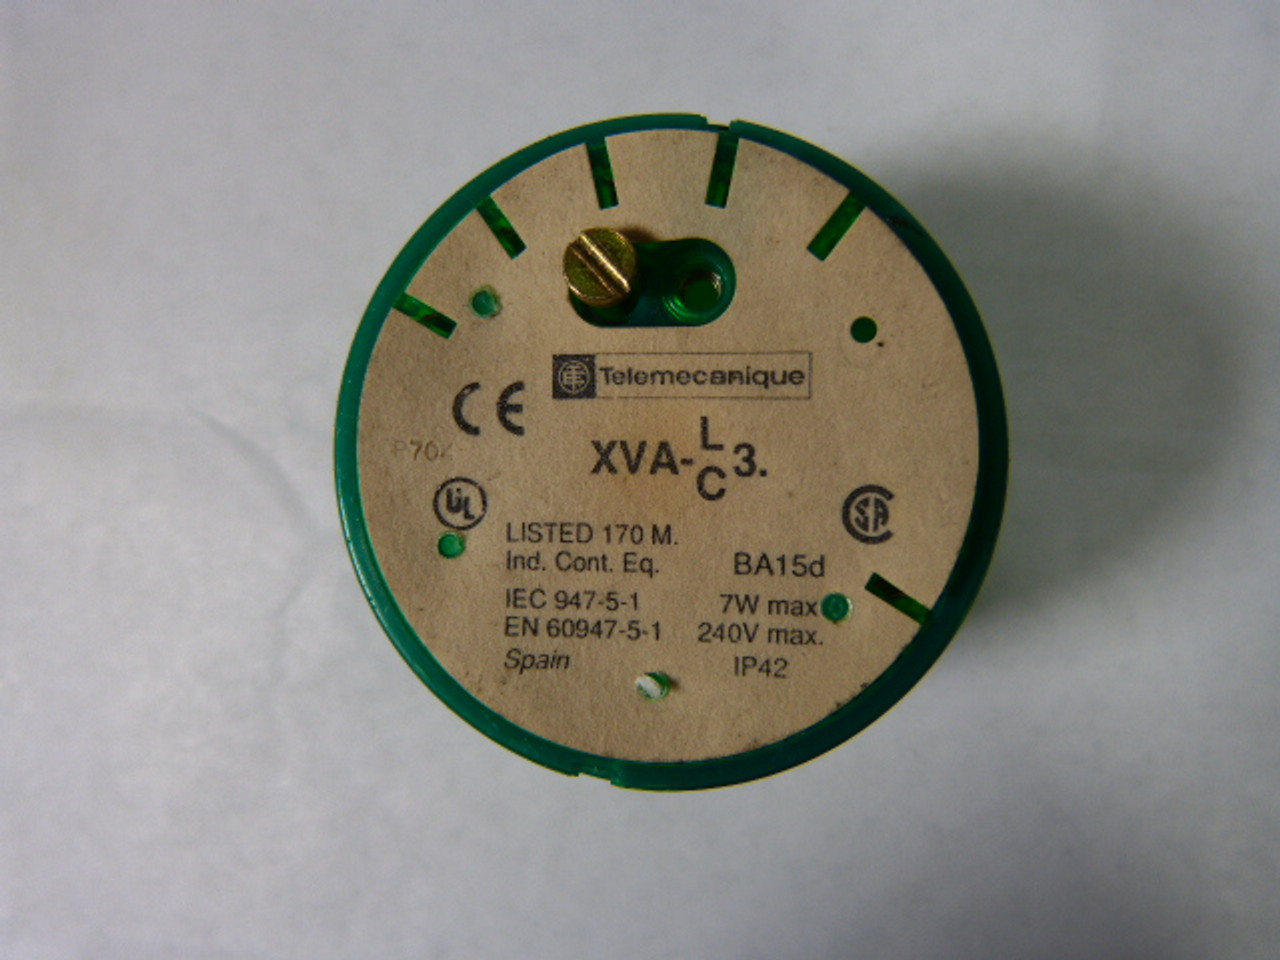 Telemecanique XVAC33 Green Stack Light w/ Bulb 240V 7W USED